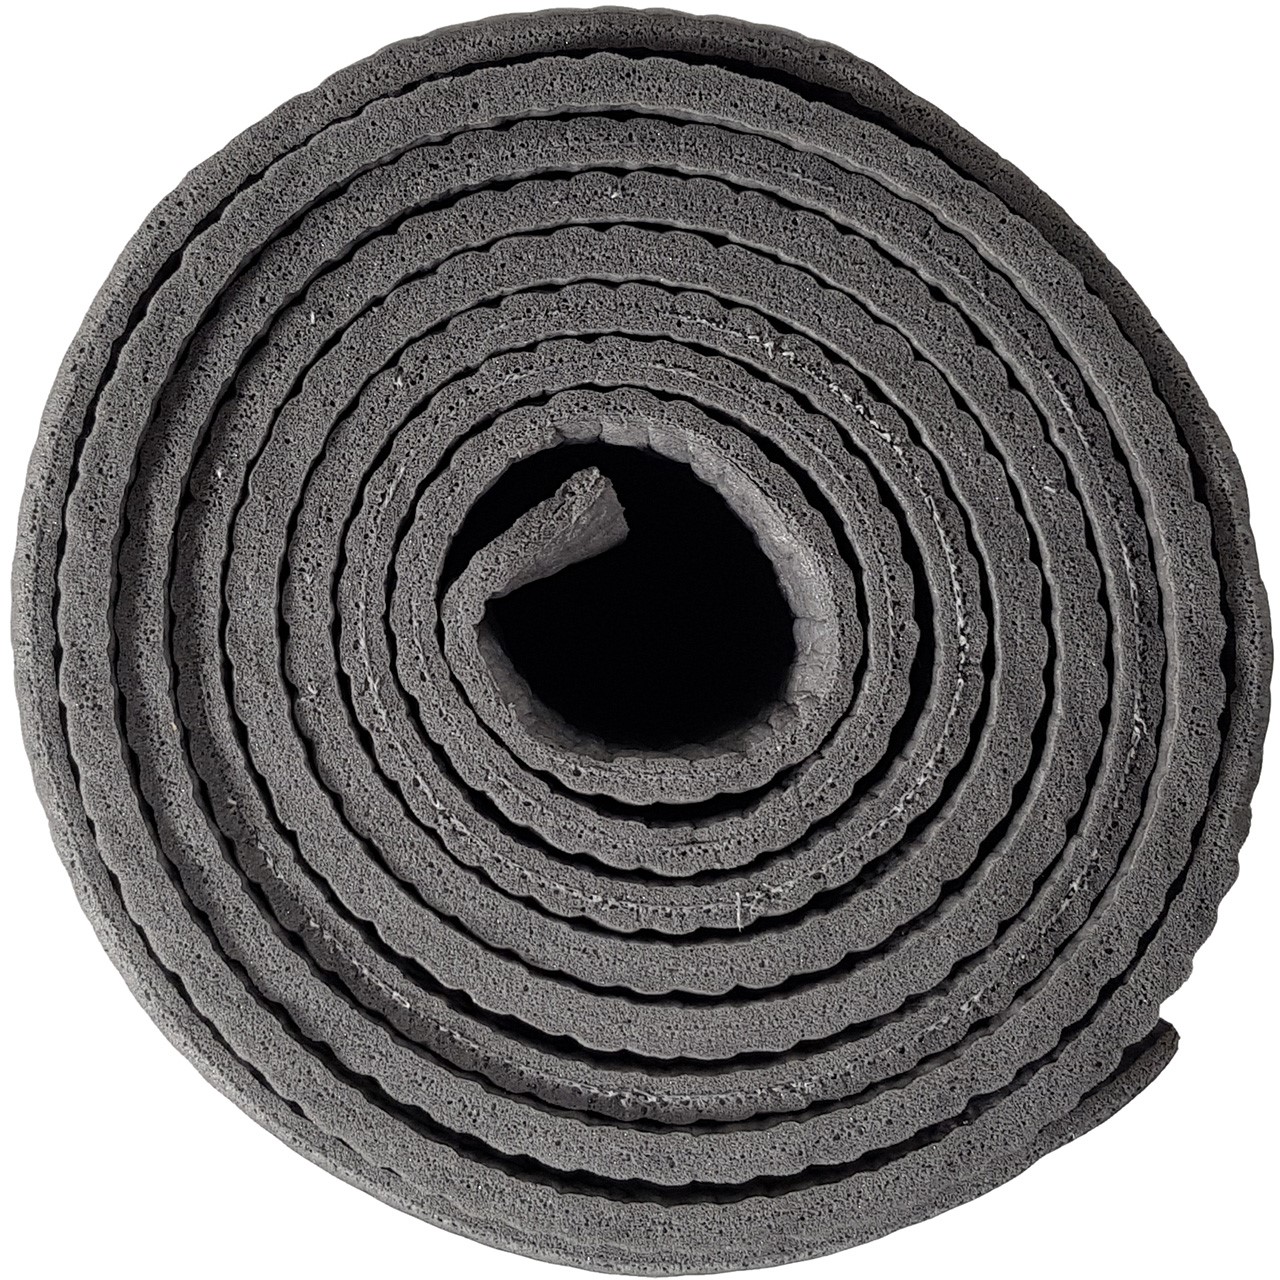 Tunturi PVC Yogamat 4 mm Anti-Slip, Anthracite with Mandala Pattern